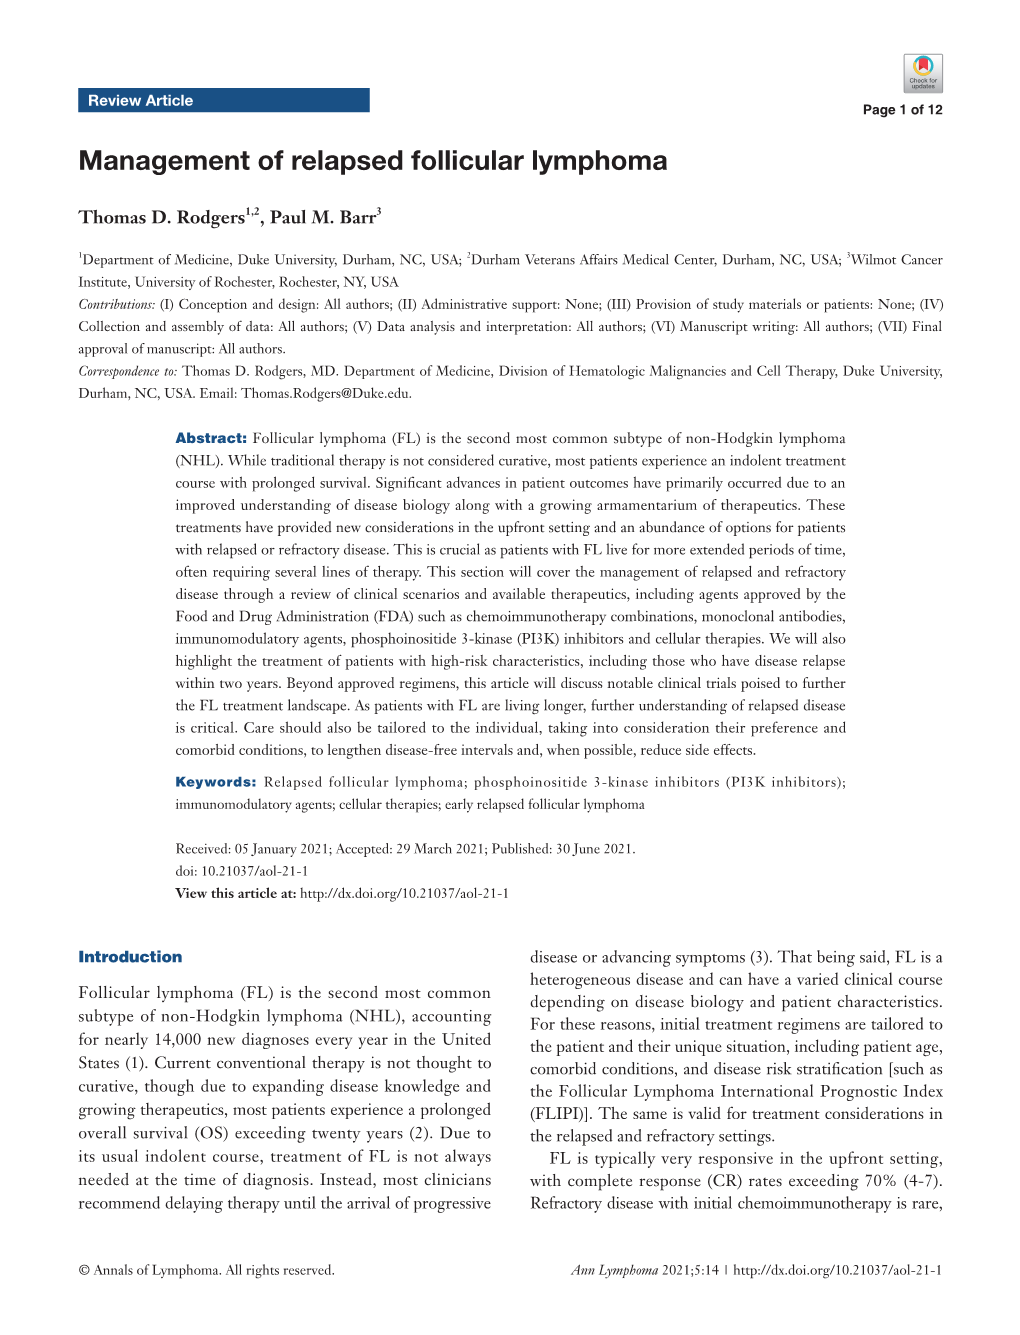 Management of Relapsed Follicular Lymphoma